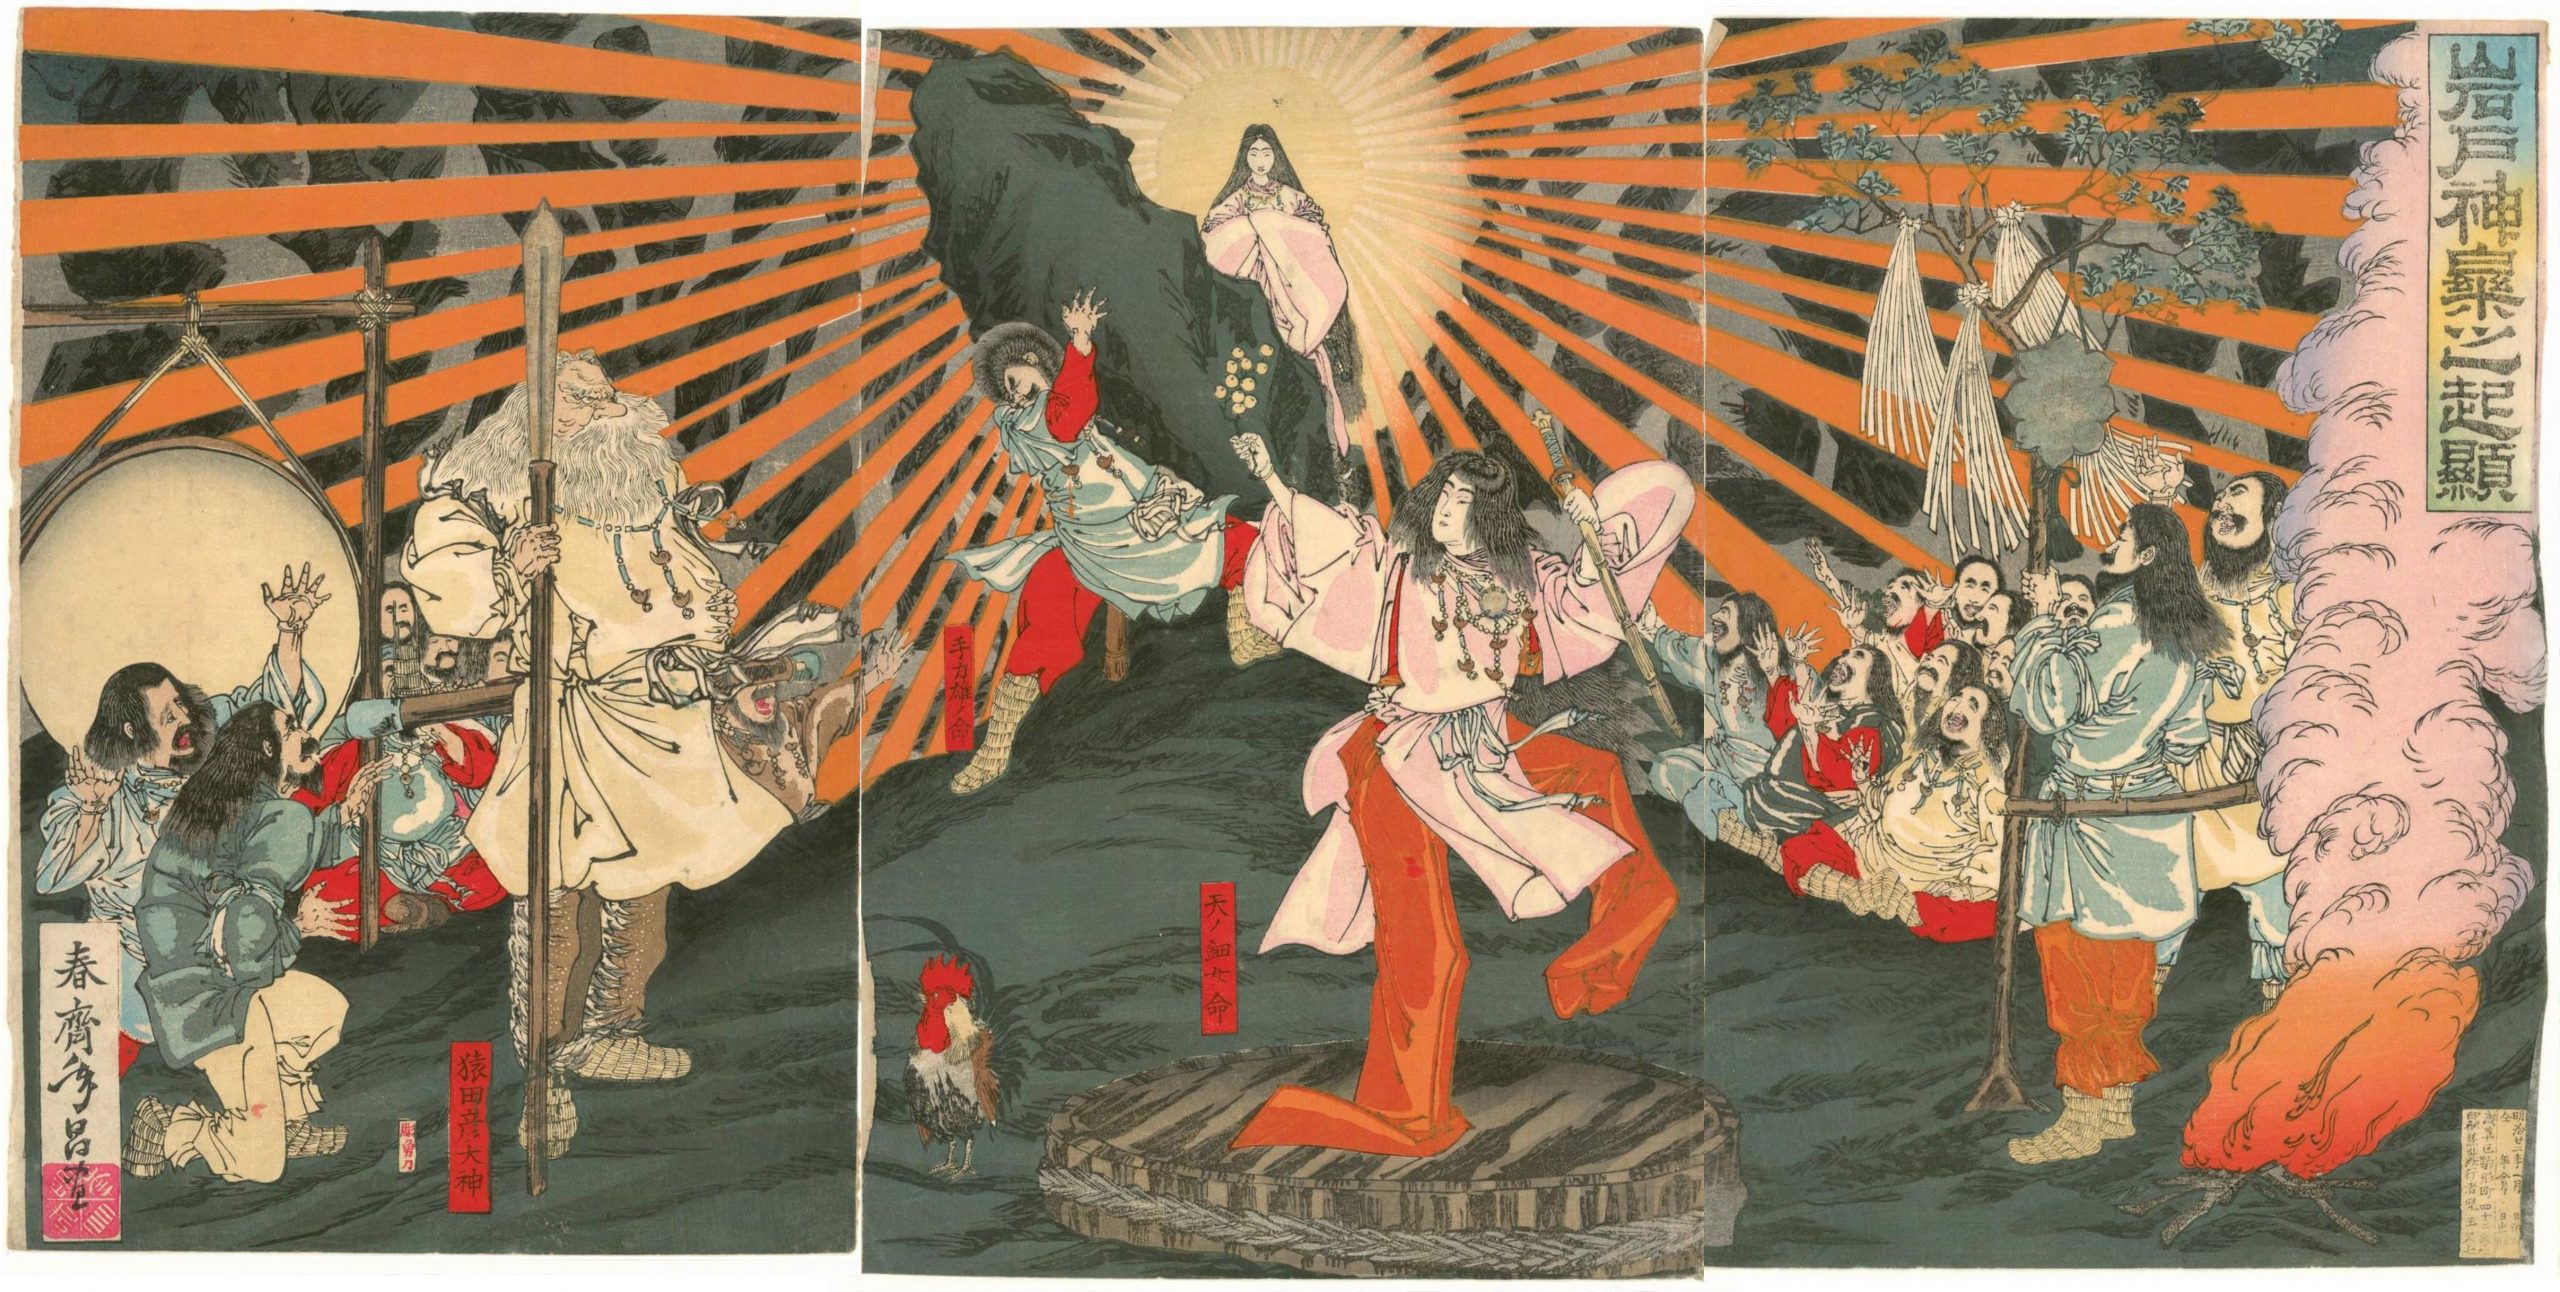 Amaterasu and the origin of the cave door dance